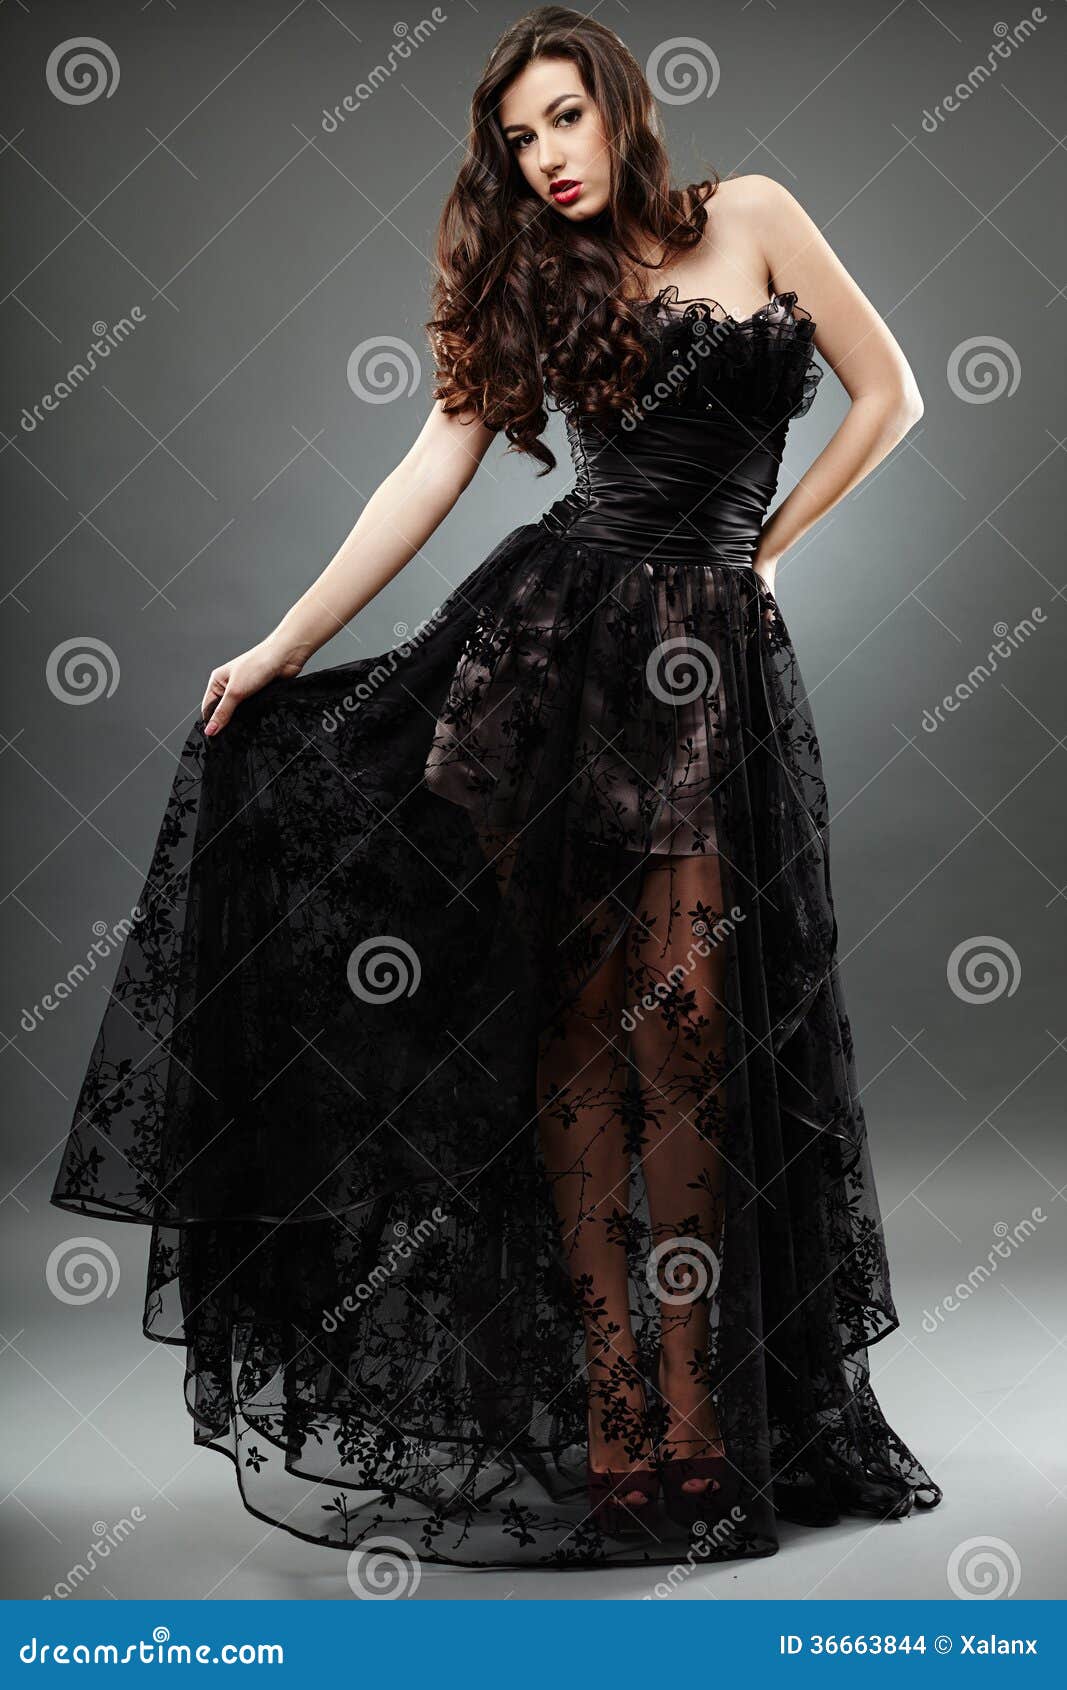 Sexy Girl Evening Dress Posing Over Stock Photo 1114660673 | Shutterstock